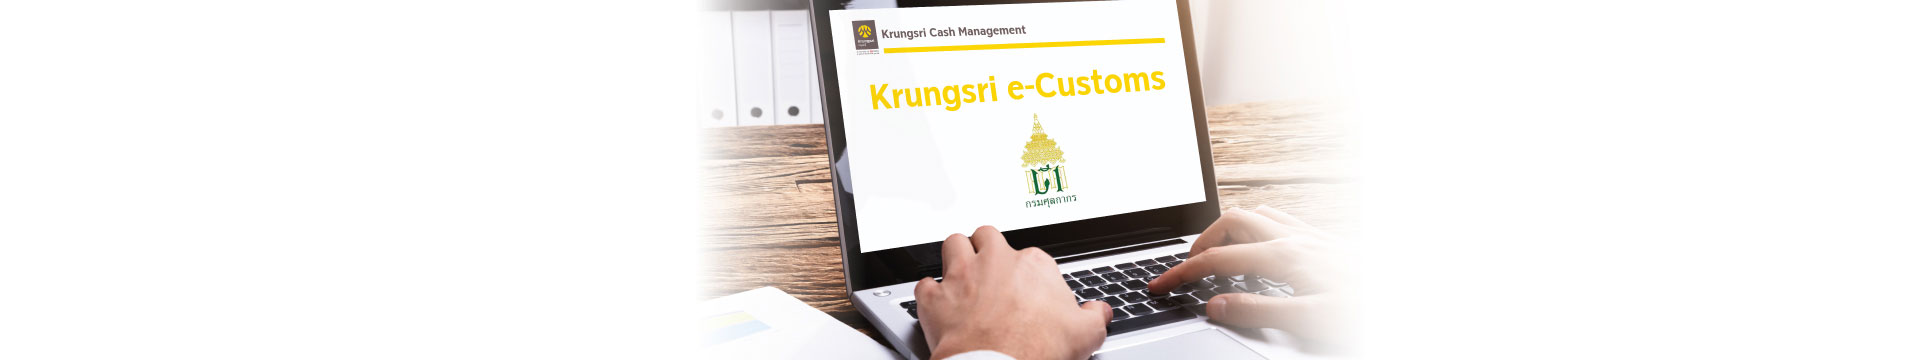 Krungsri e-Customs